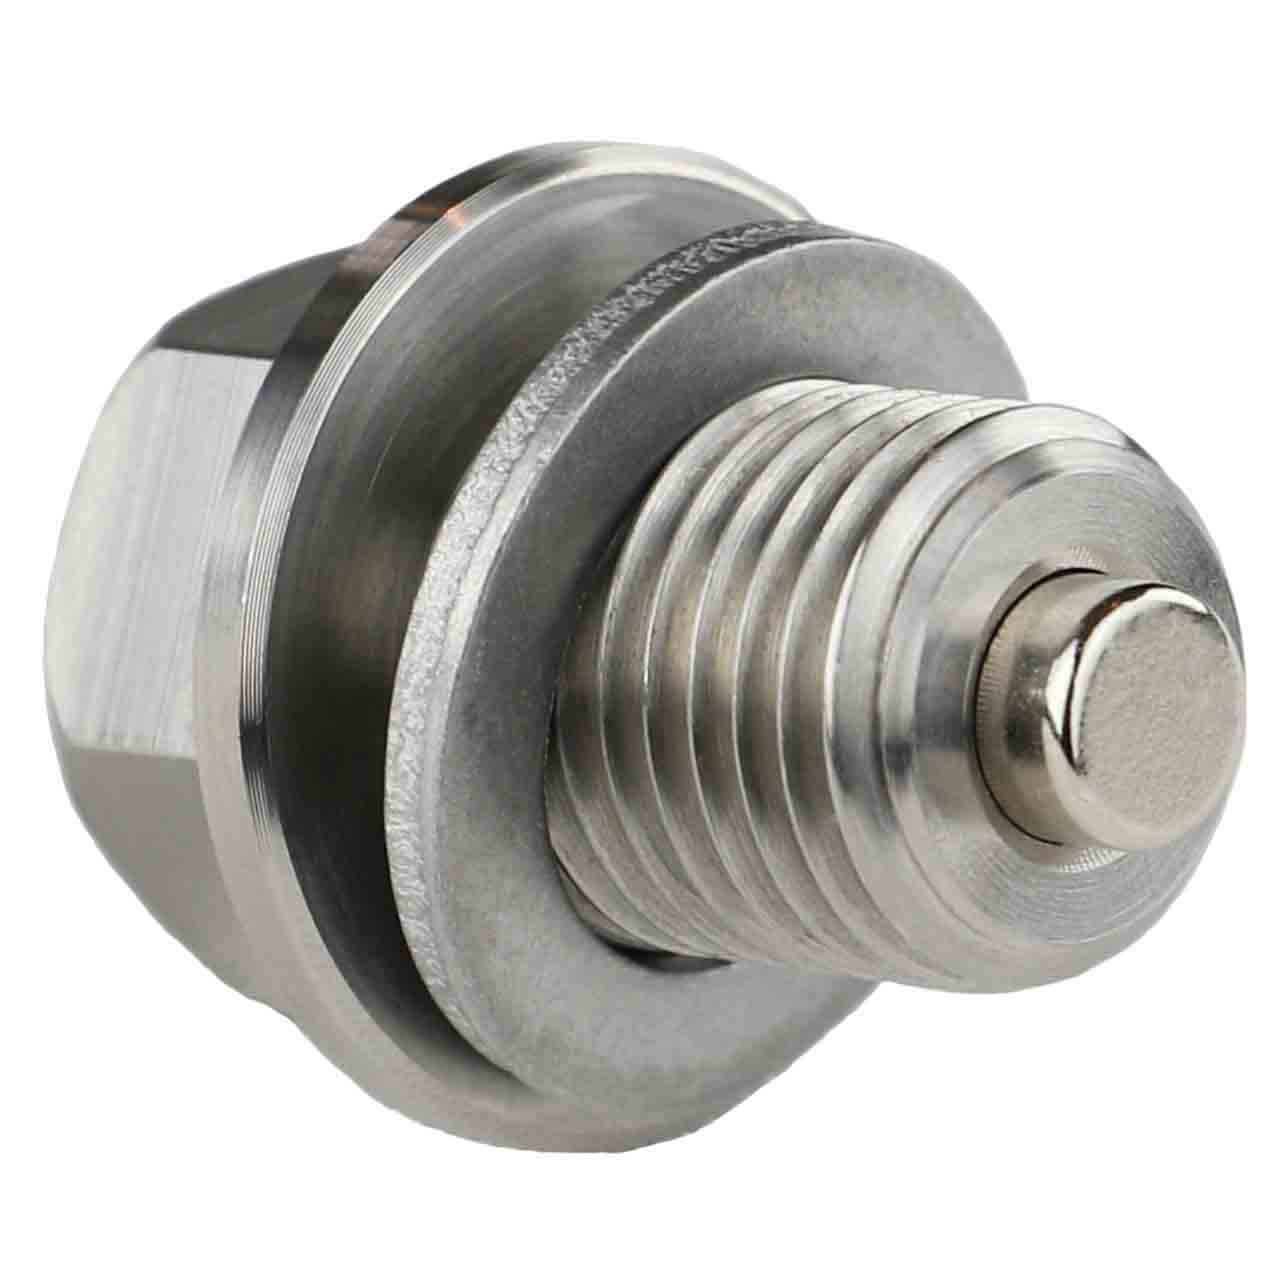 Suzuki Aerio Magnetic Oil Drain Plug - 2004-2007 - 2.3 Liter - 4 Cylinder - Made In USA - Stainless Steel - Part Number 09247-14044